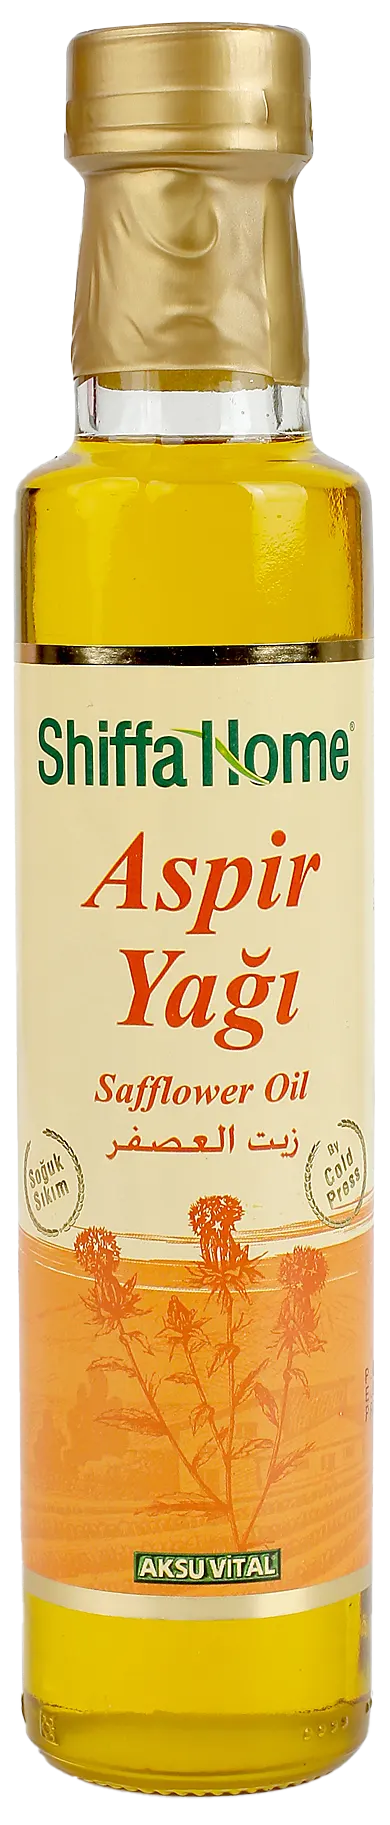 Shiffa Home - Aspir Yağı 250 ml.